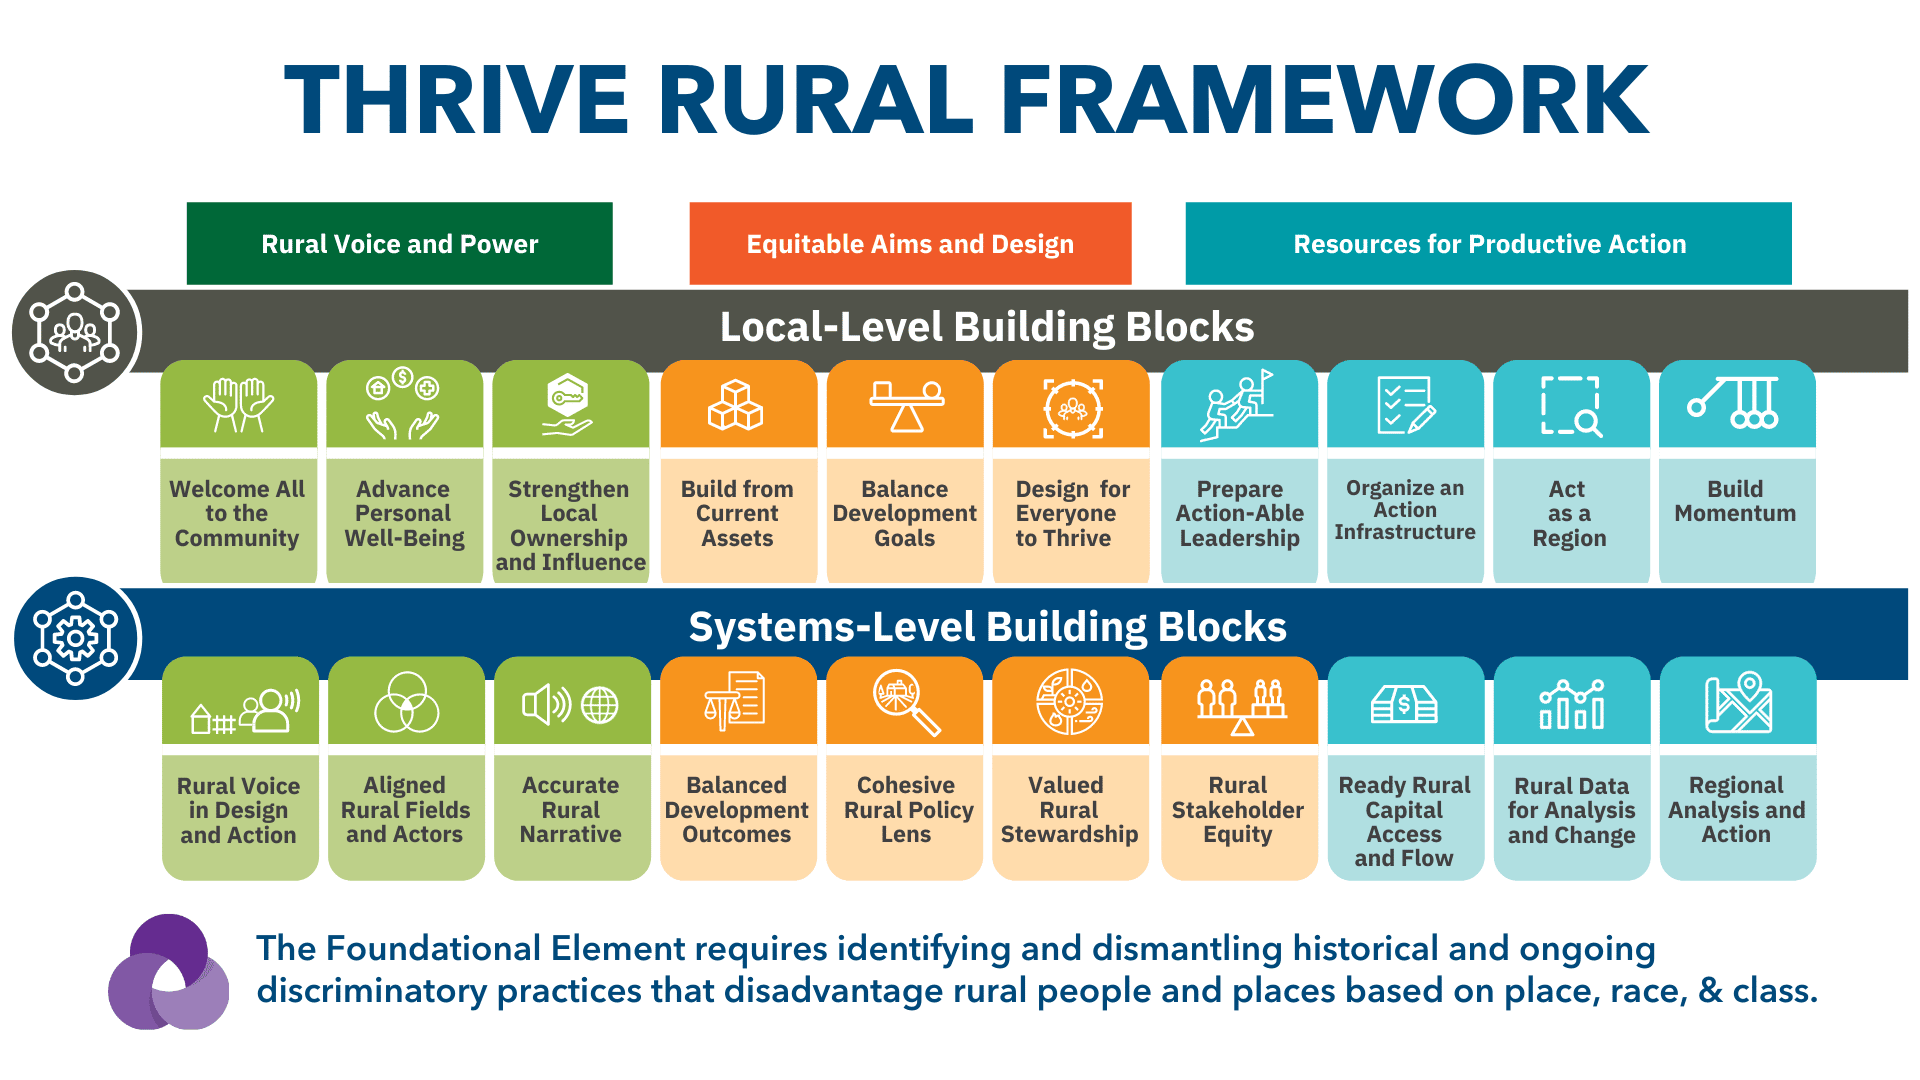 The Thrive Rural Framework